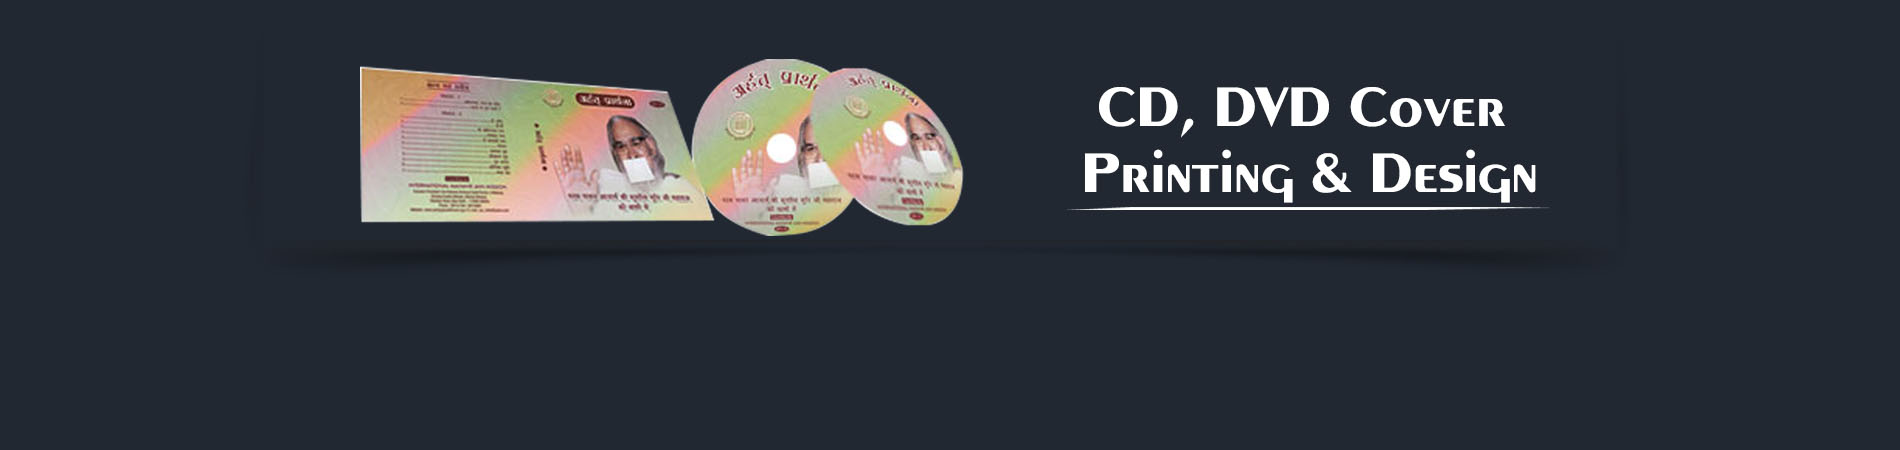 CD, DVD Cover Printing & Design in India